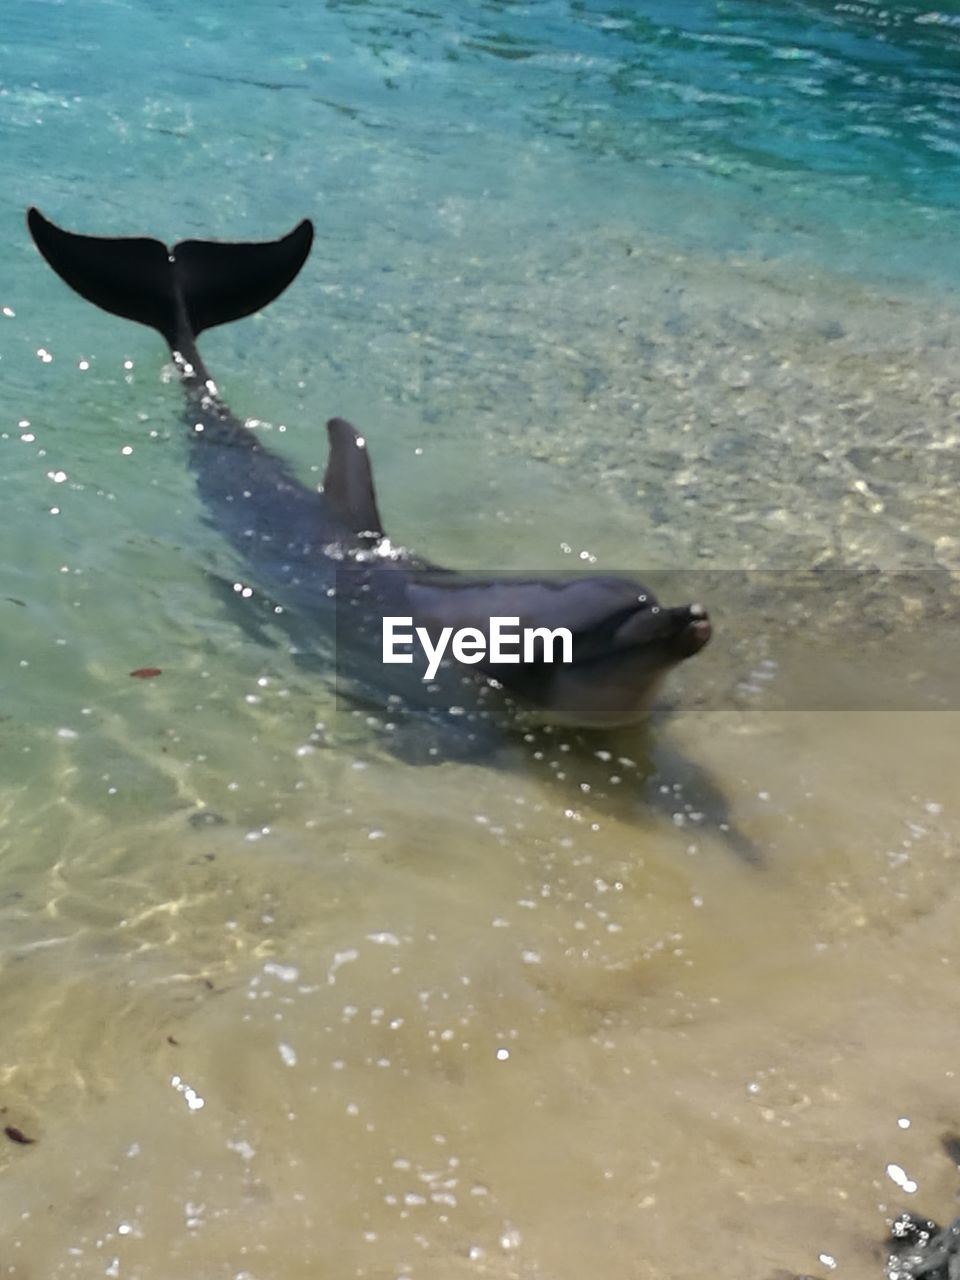 BLACK SWAN SWIMMING IN WATER